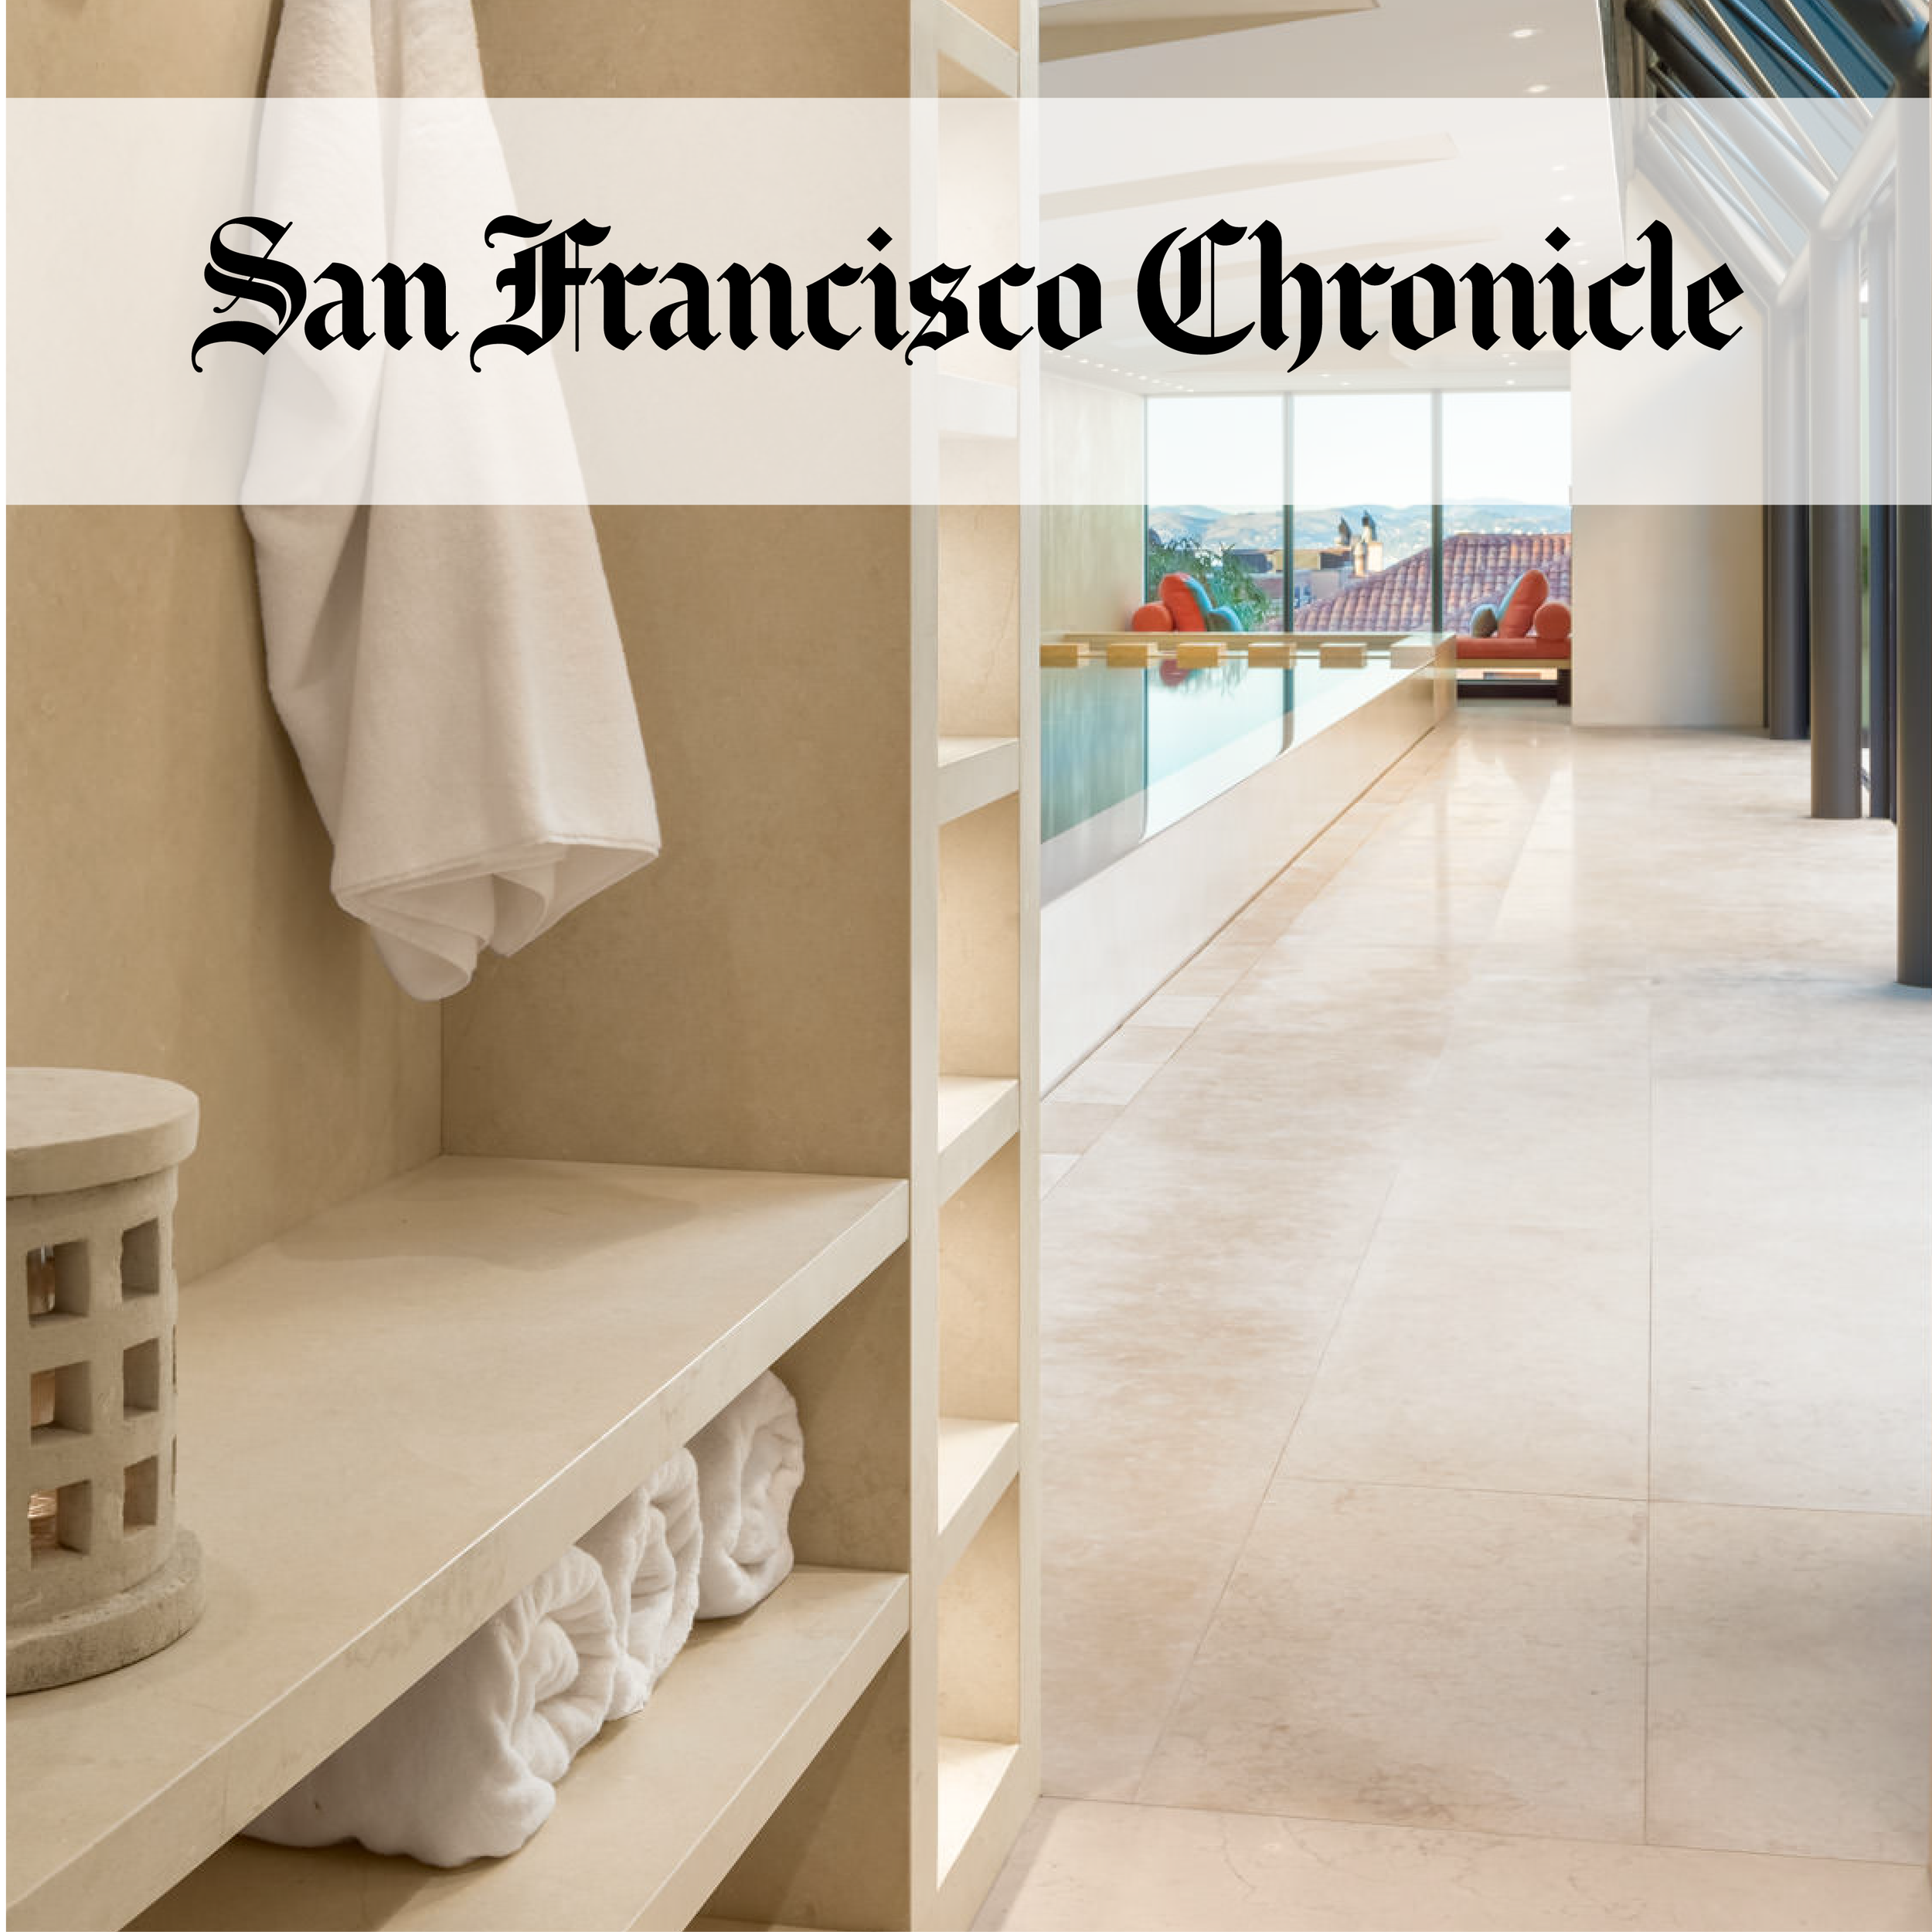 San Francisco Chronicle Publication